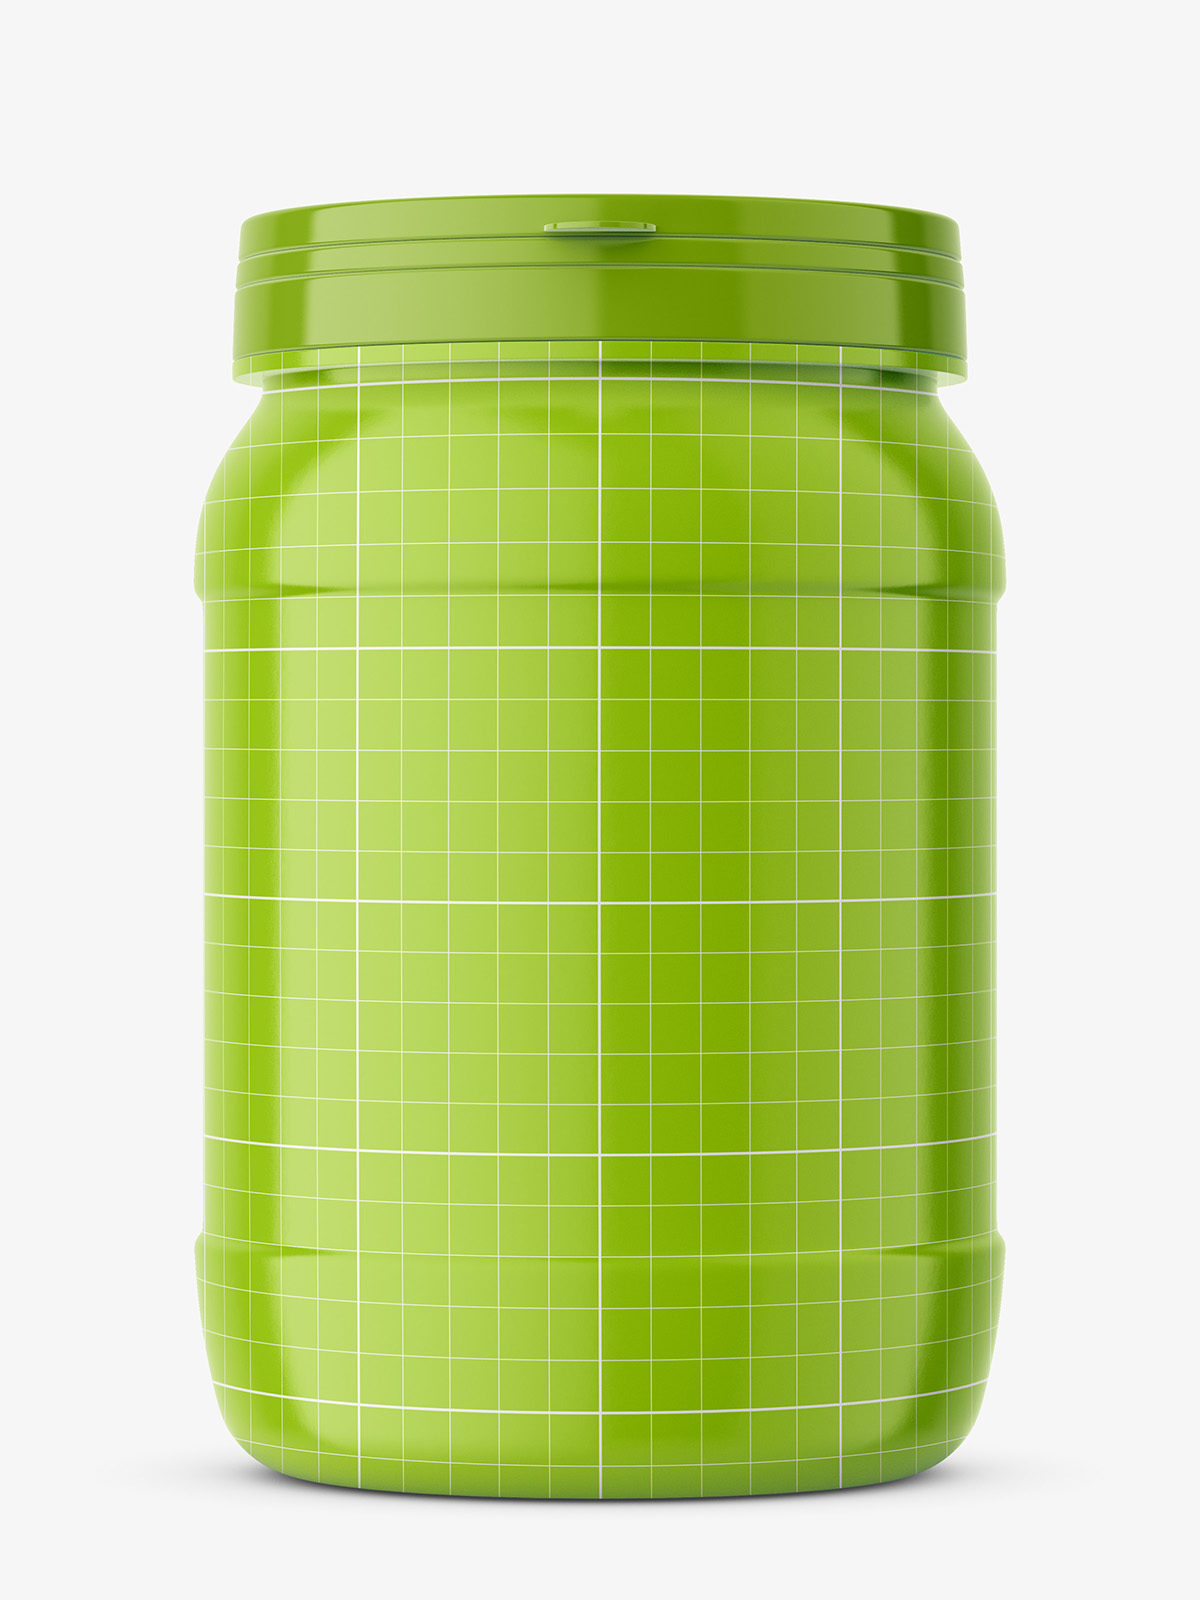 Protein jar mockup / glossy - Smarty Mockups